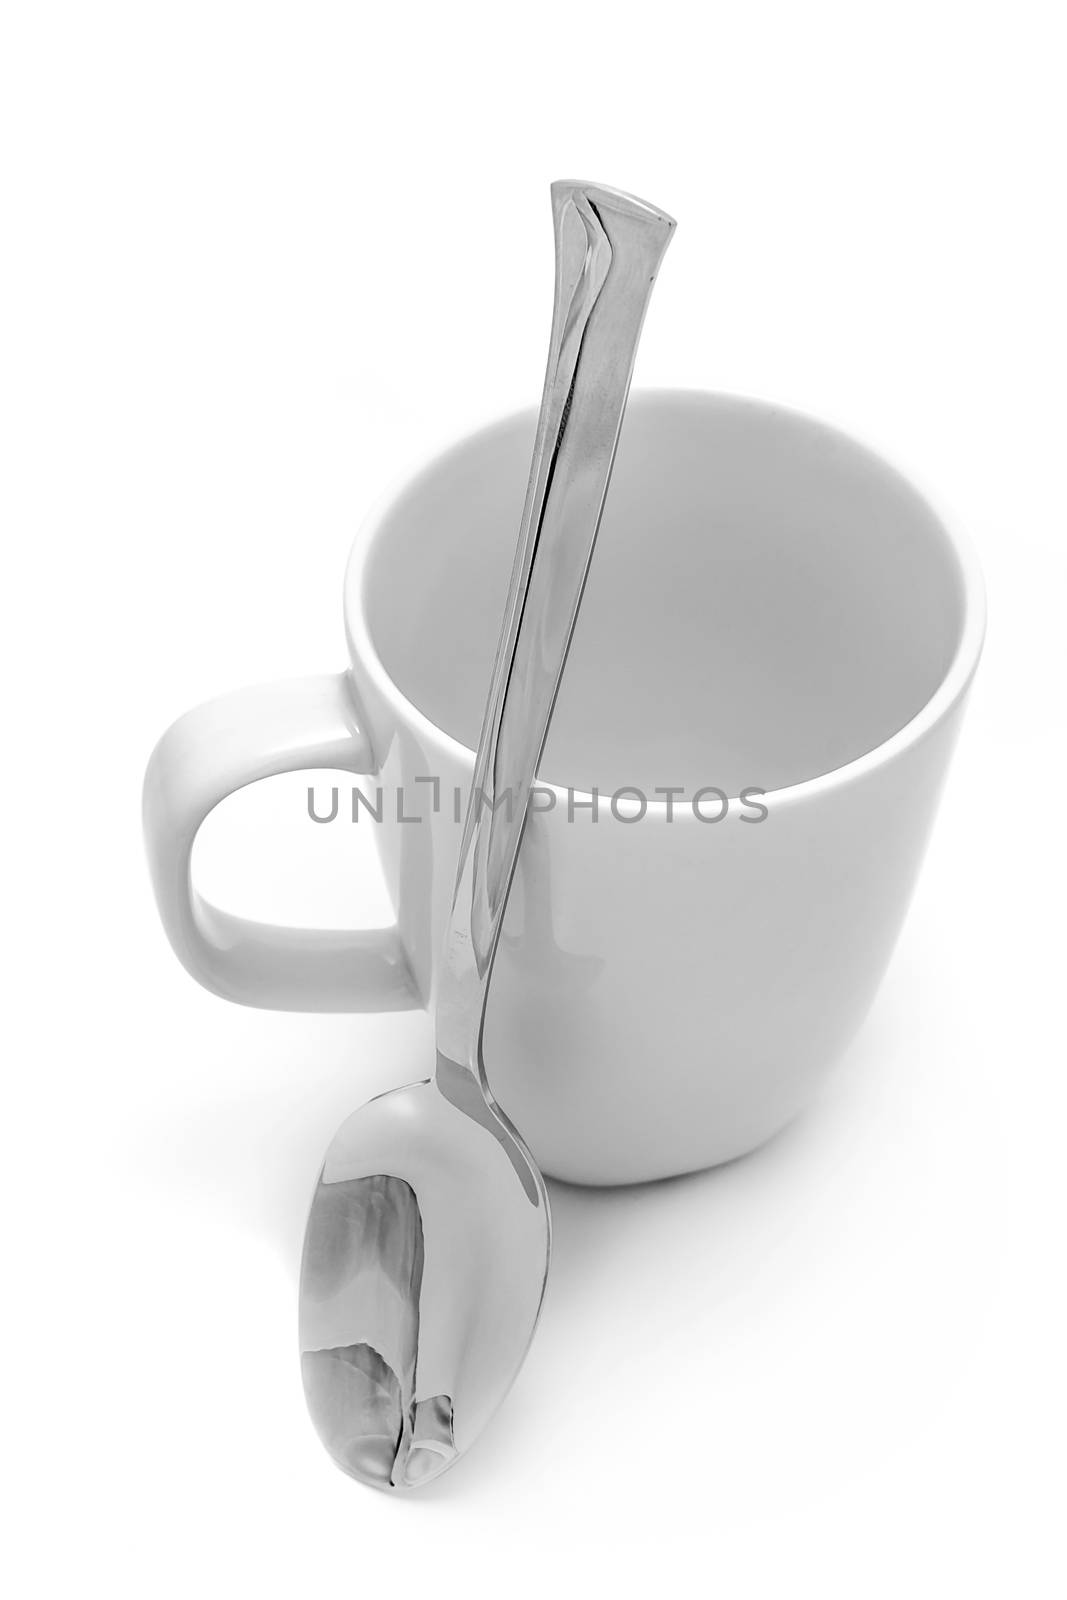 White mug and spoon on white background